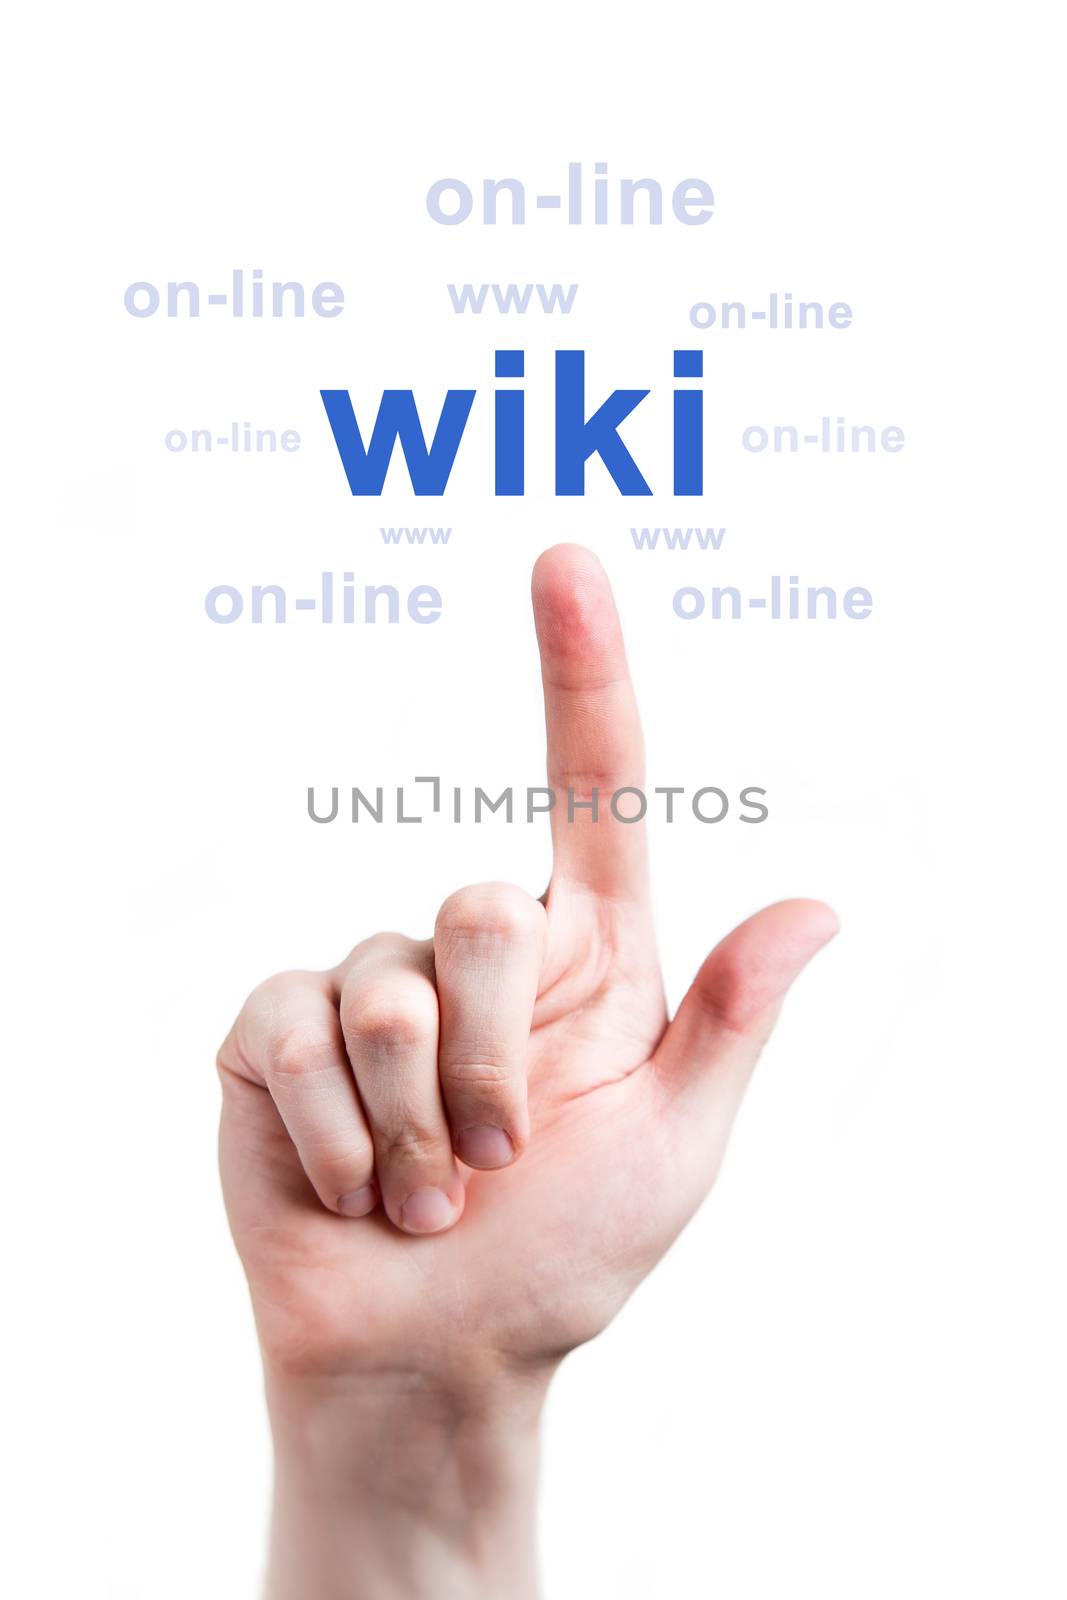 Finger clicks word wiki online by MichalLudwiczak